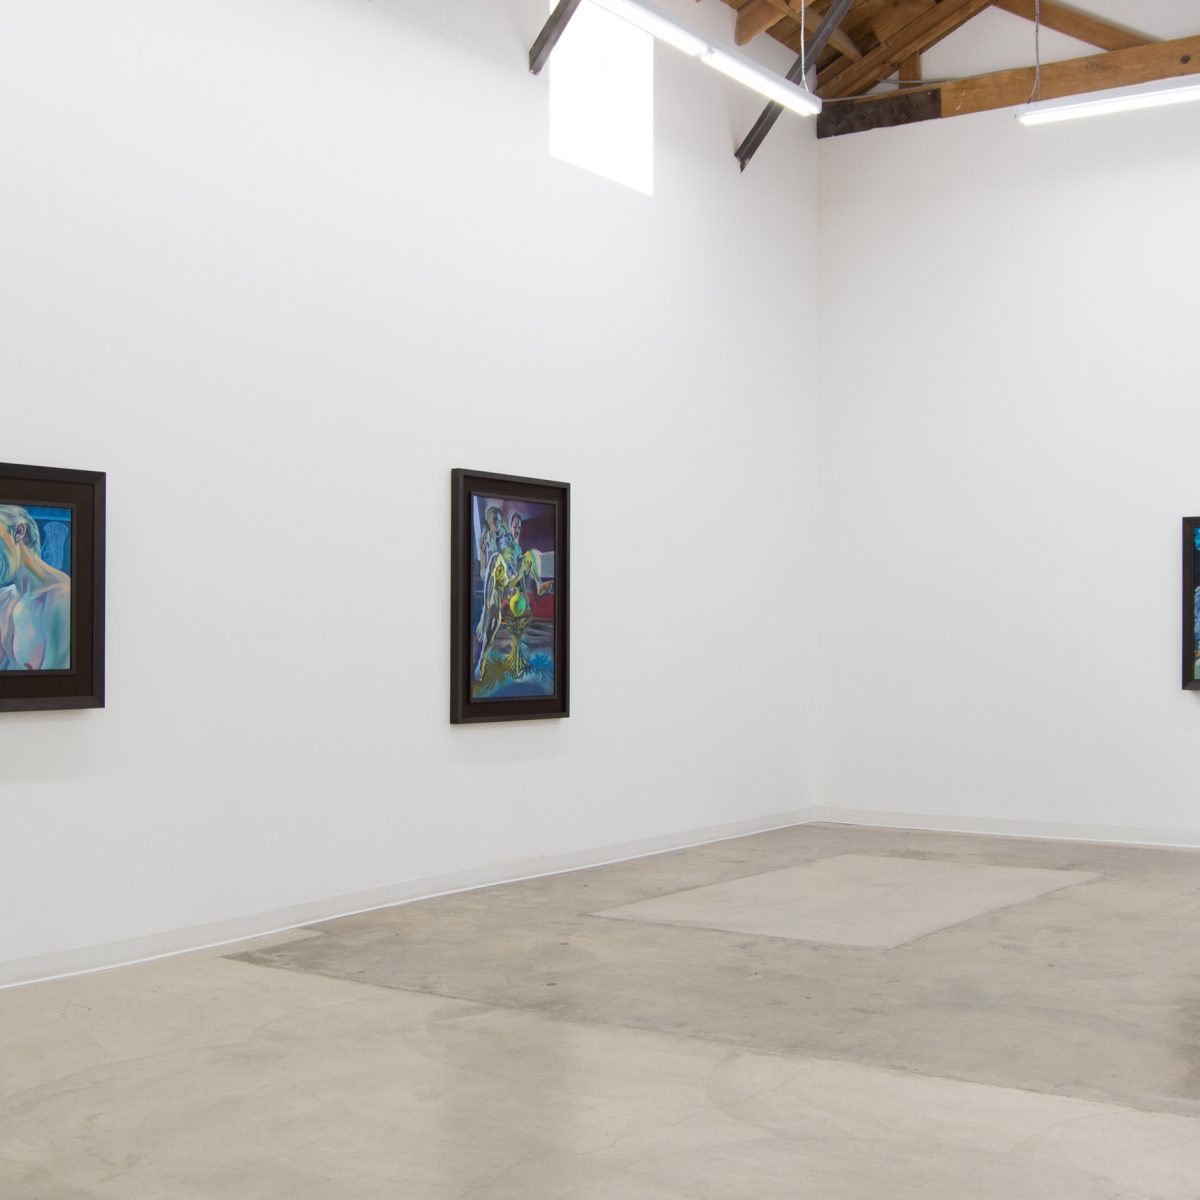 2015, Brett Reichman solo exhibition "Better Living Through Design" at CB1 Gallery in Los Angeles, CA